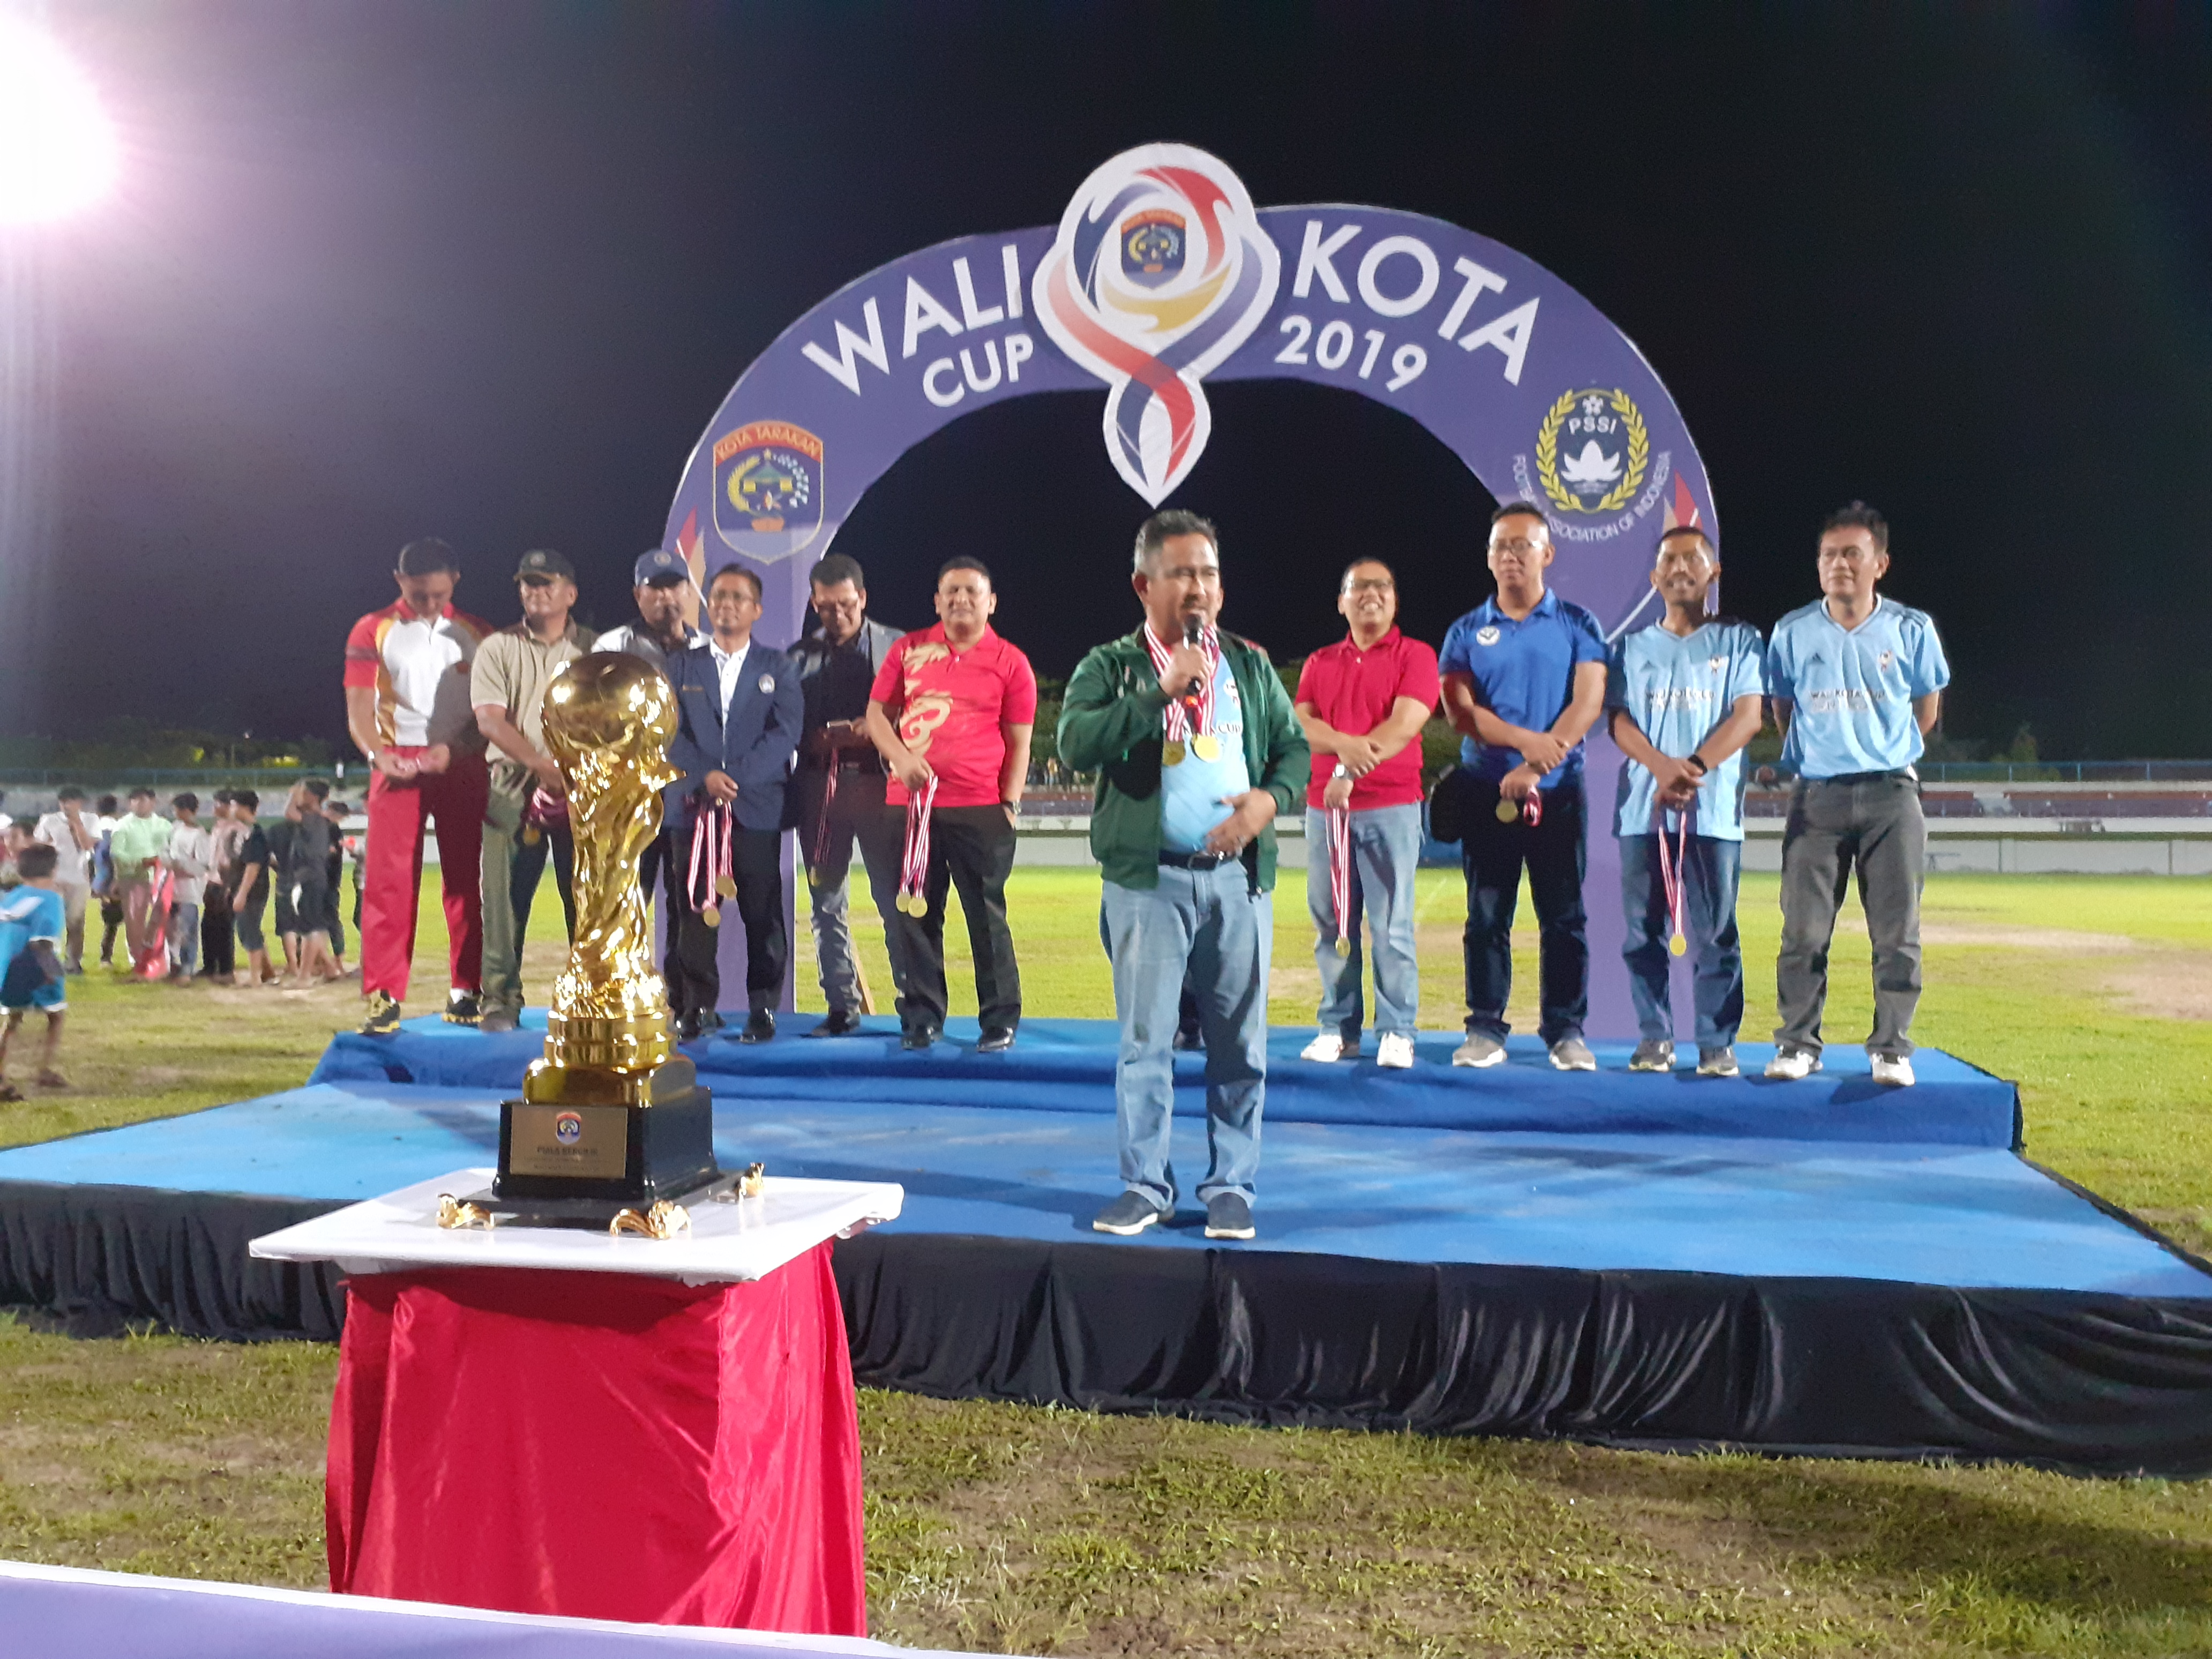 Wali Kota Cup 2019 Sukses, Khairul: Tahun Depan Kita Laksanakan Lagi